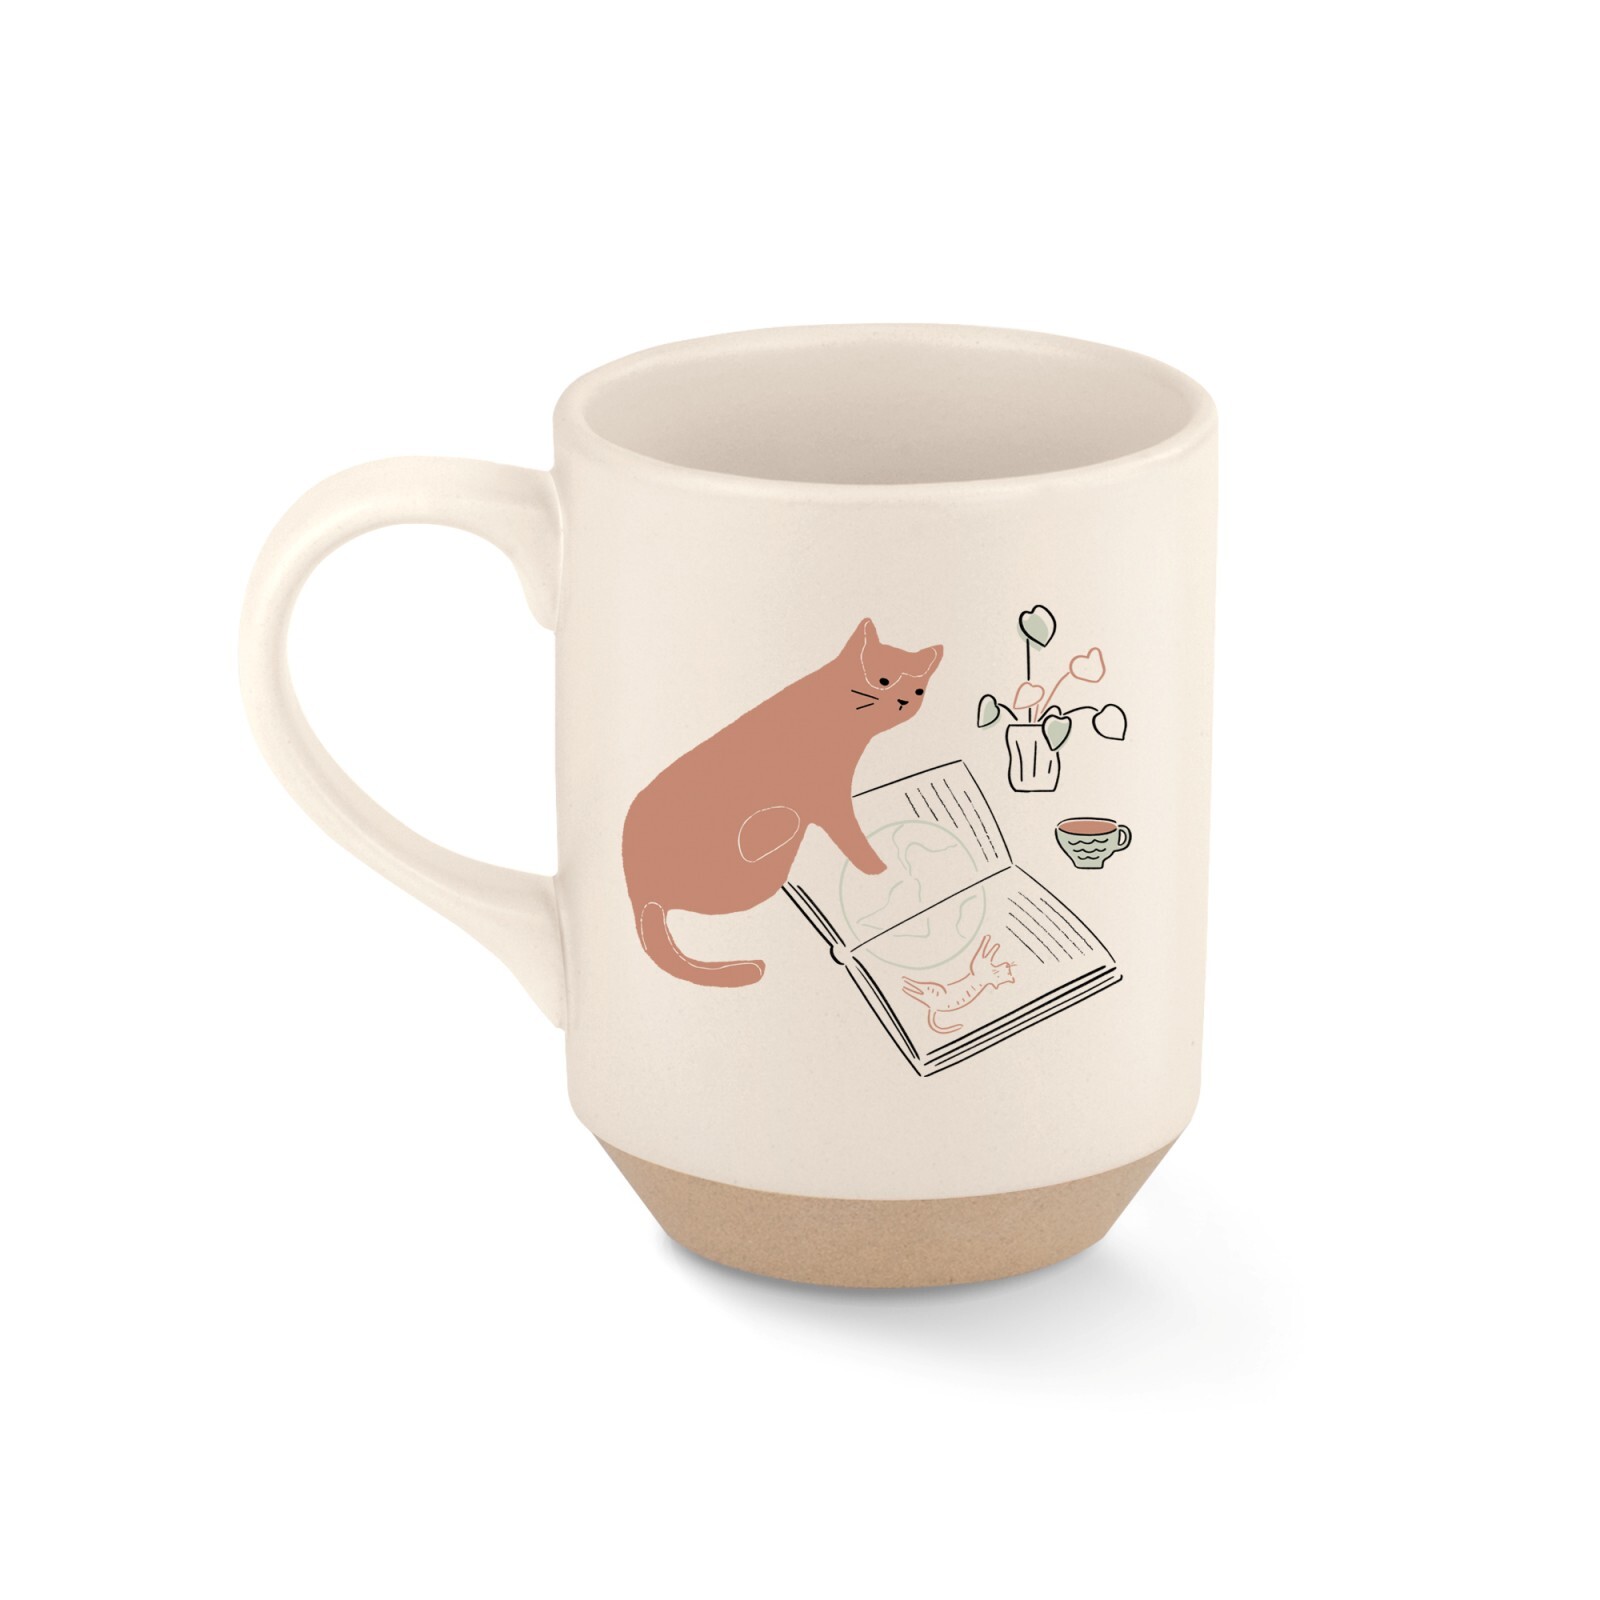 Fringe Studio Stoneware Tea or Coffee Mug - Cat & New York Times image 0